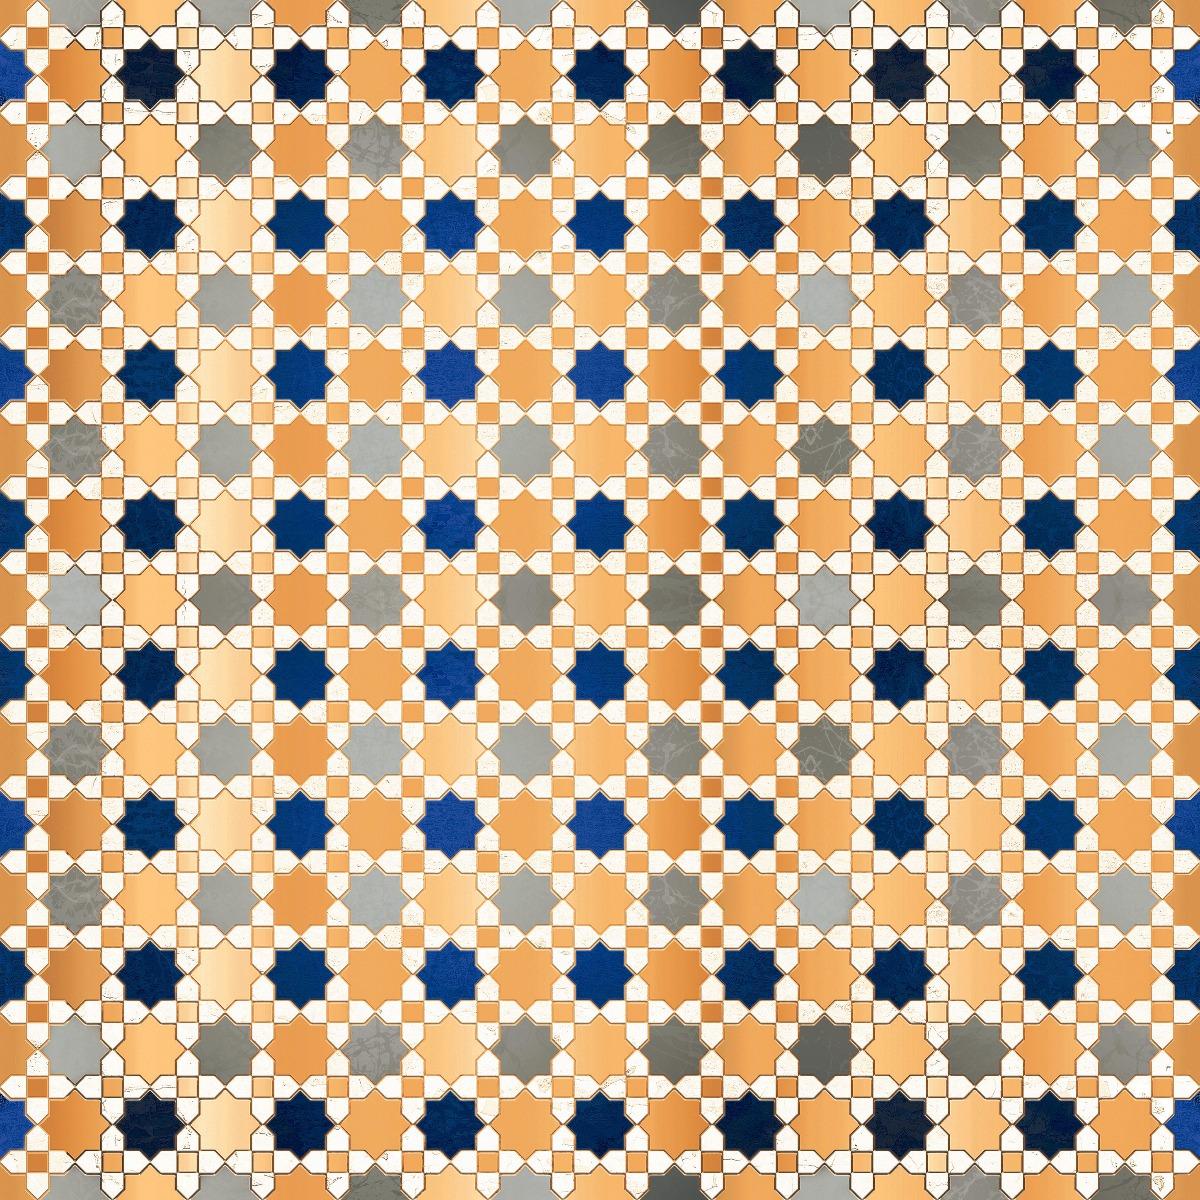 Blue Tiles for Bathroom Tiles, Living Room Tiles, Kitchen Tiles, Bedroom Tiles, Accent Tiles, Office Tiles, Dining Room Tiles, Bar Tiles, Restaurant Tiles, Hospital Tiles, High Traffic Tiles, Bar/Restaurant, Commercial/Office, Outdoor Area